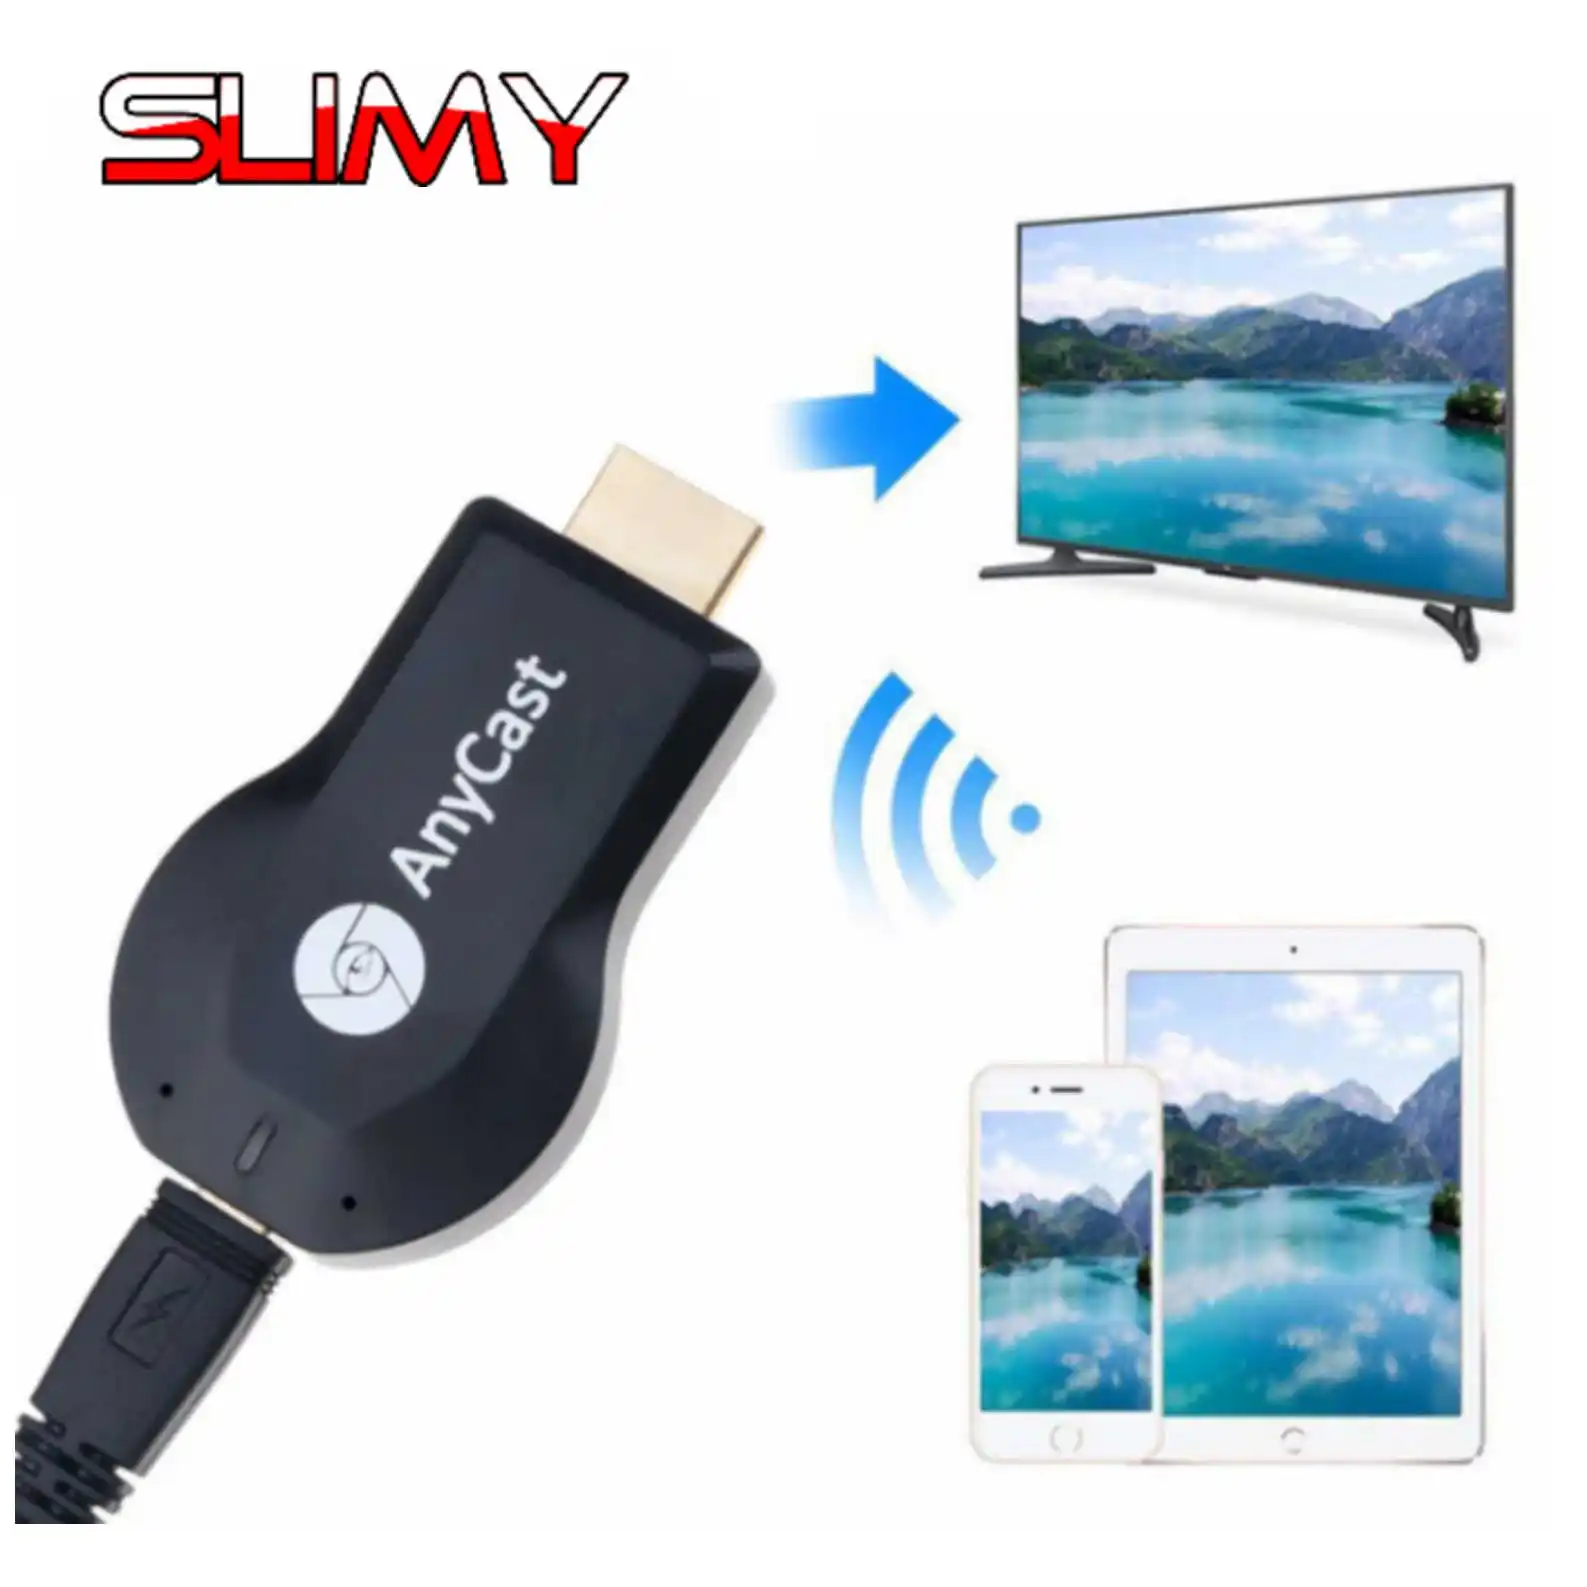 Slimy mirascreen EZCast Беспроводной HDMI ТВ-карта хромированные шарики 2 Хромированные шарики mirascreen Wi-Fi Дисплей Miracast DLNA AirPlay TV Электронный ключ-заглушка